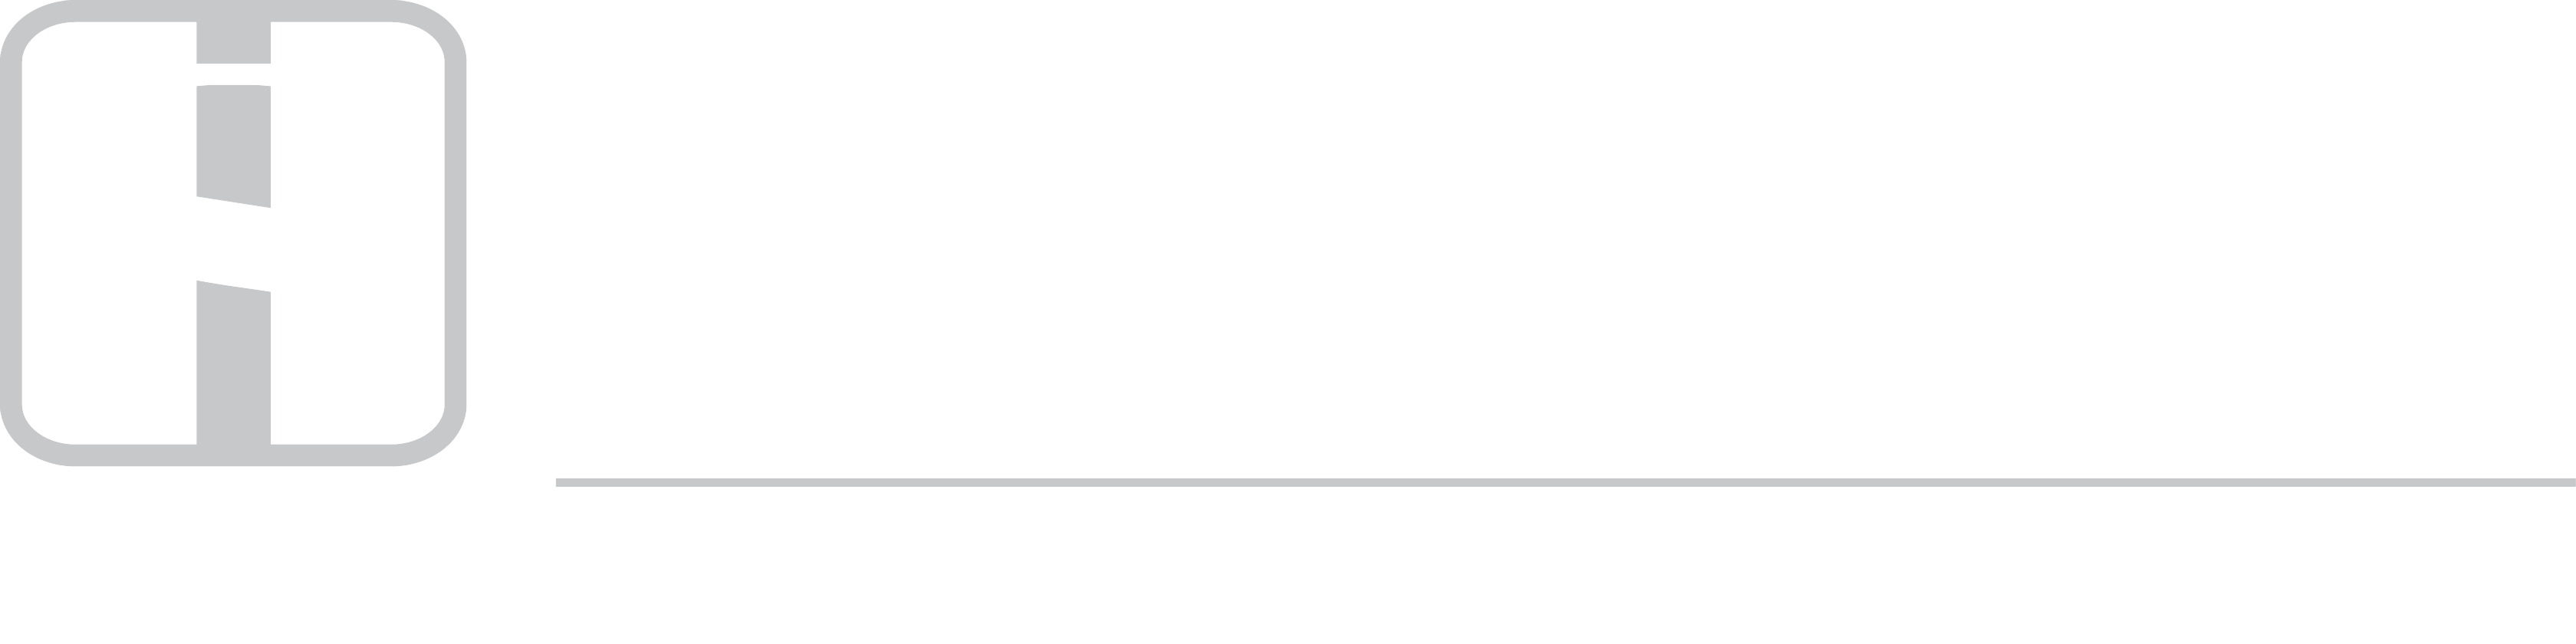 Savings Institute Bank & Trust